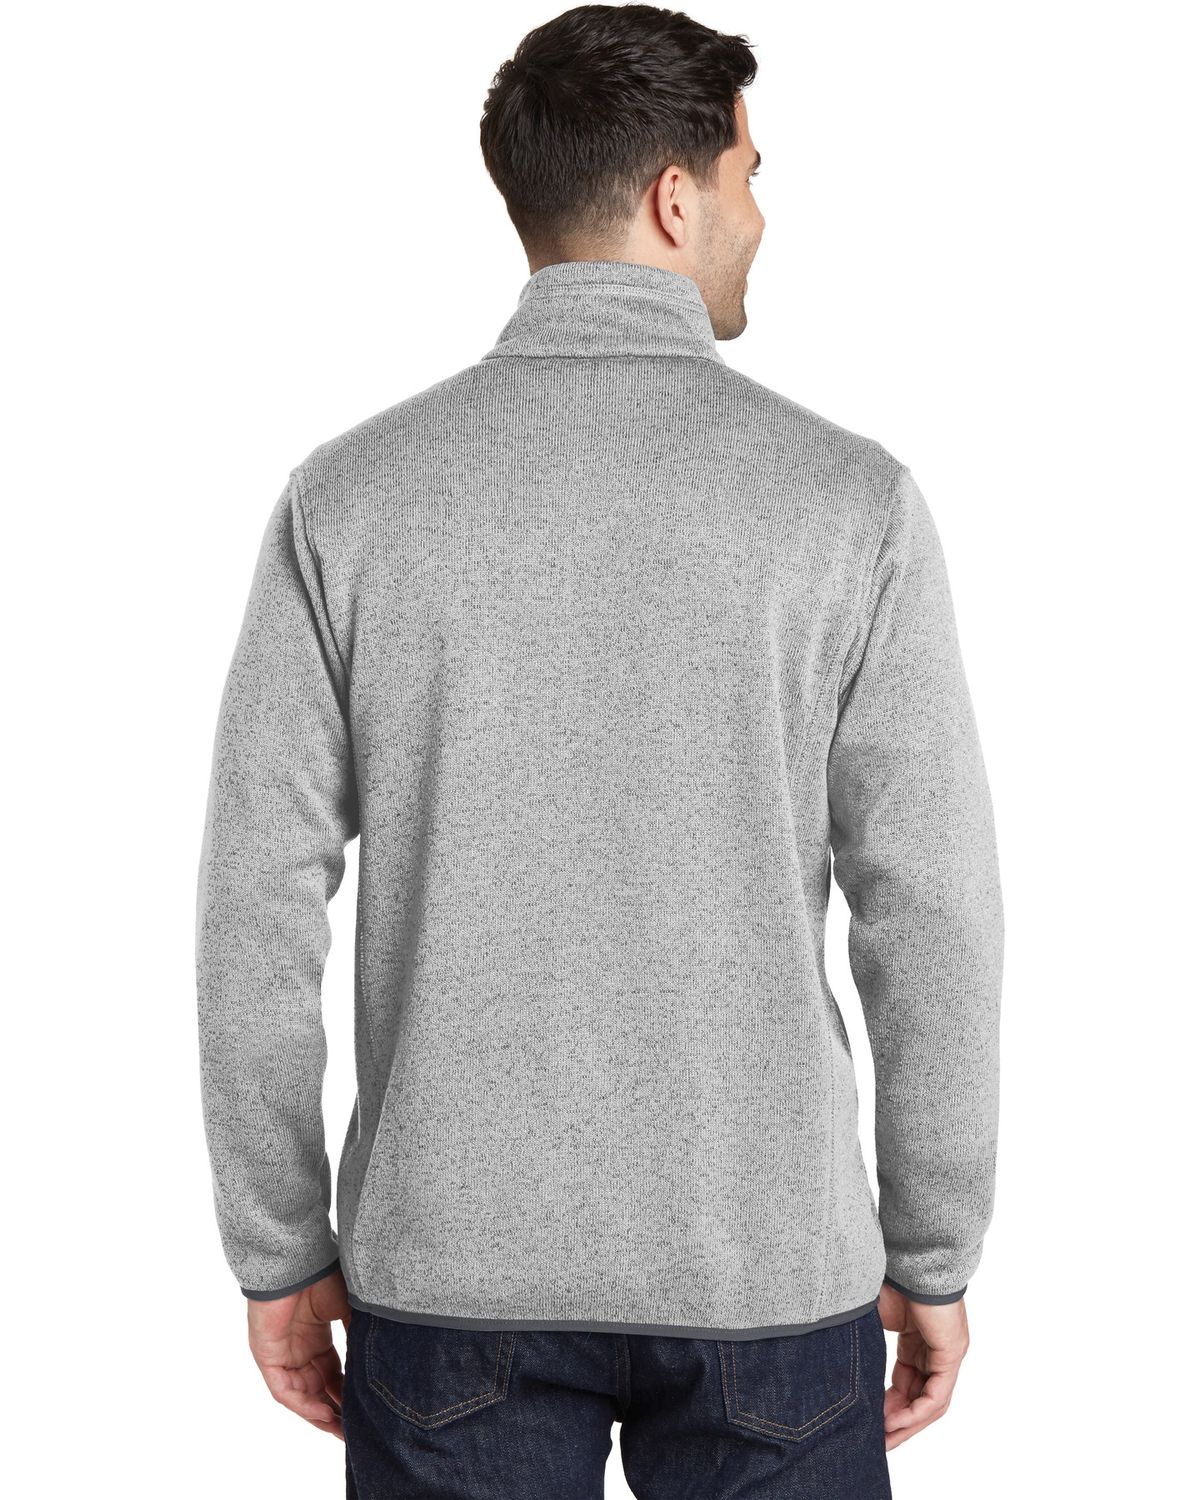 'Port Authority F232 Sweater Fleece Jacket'